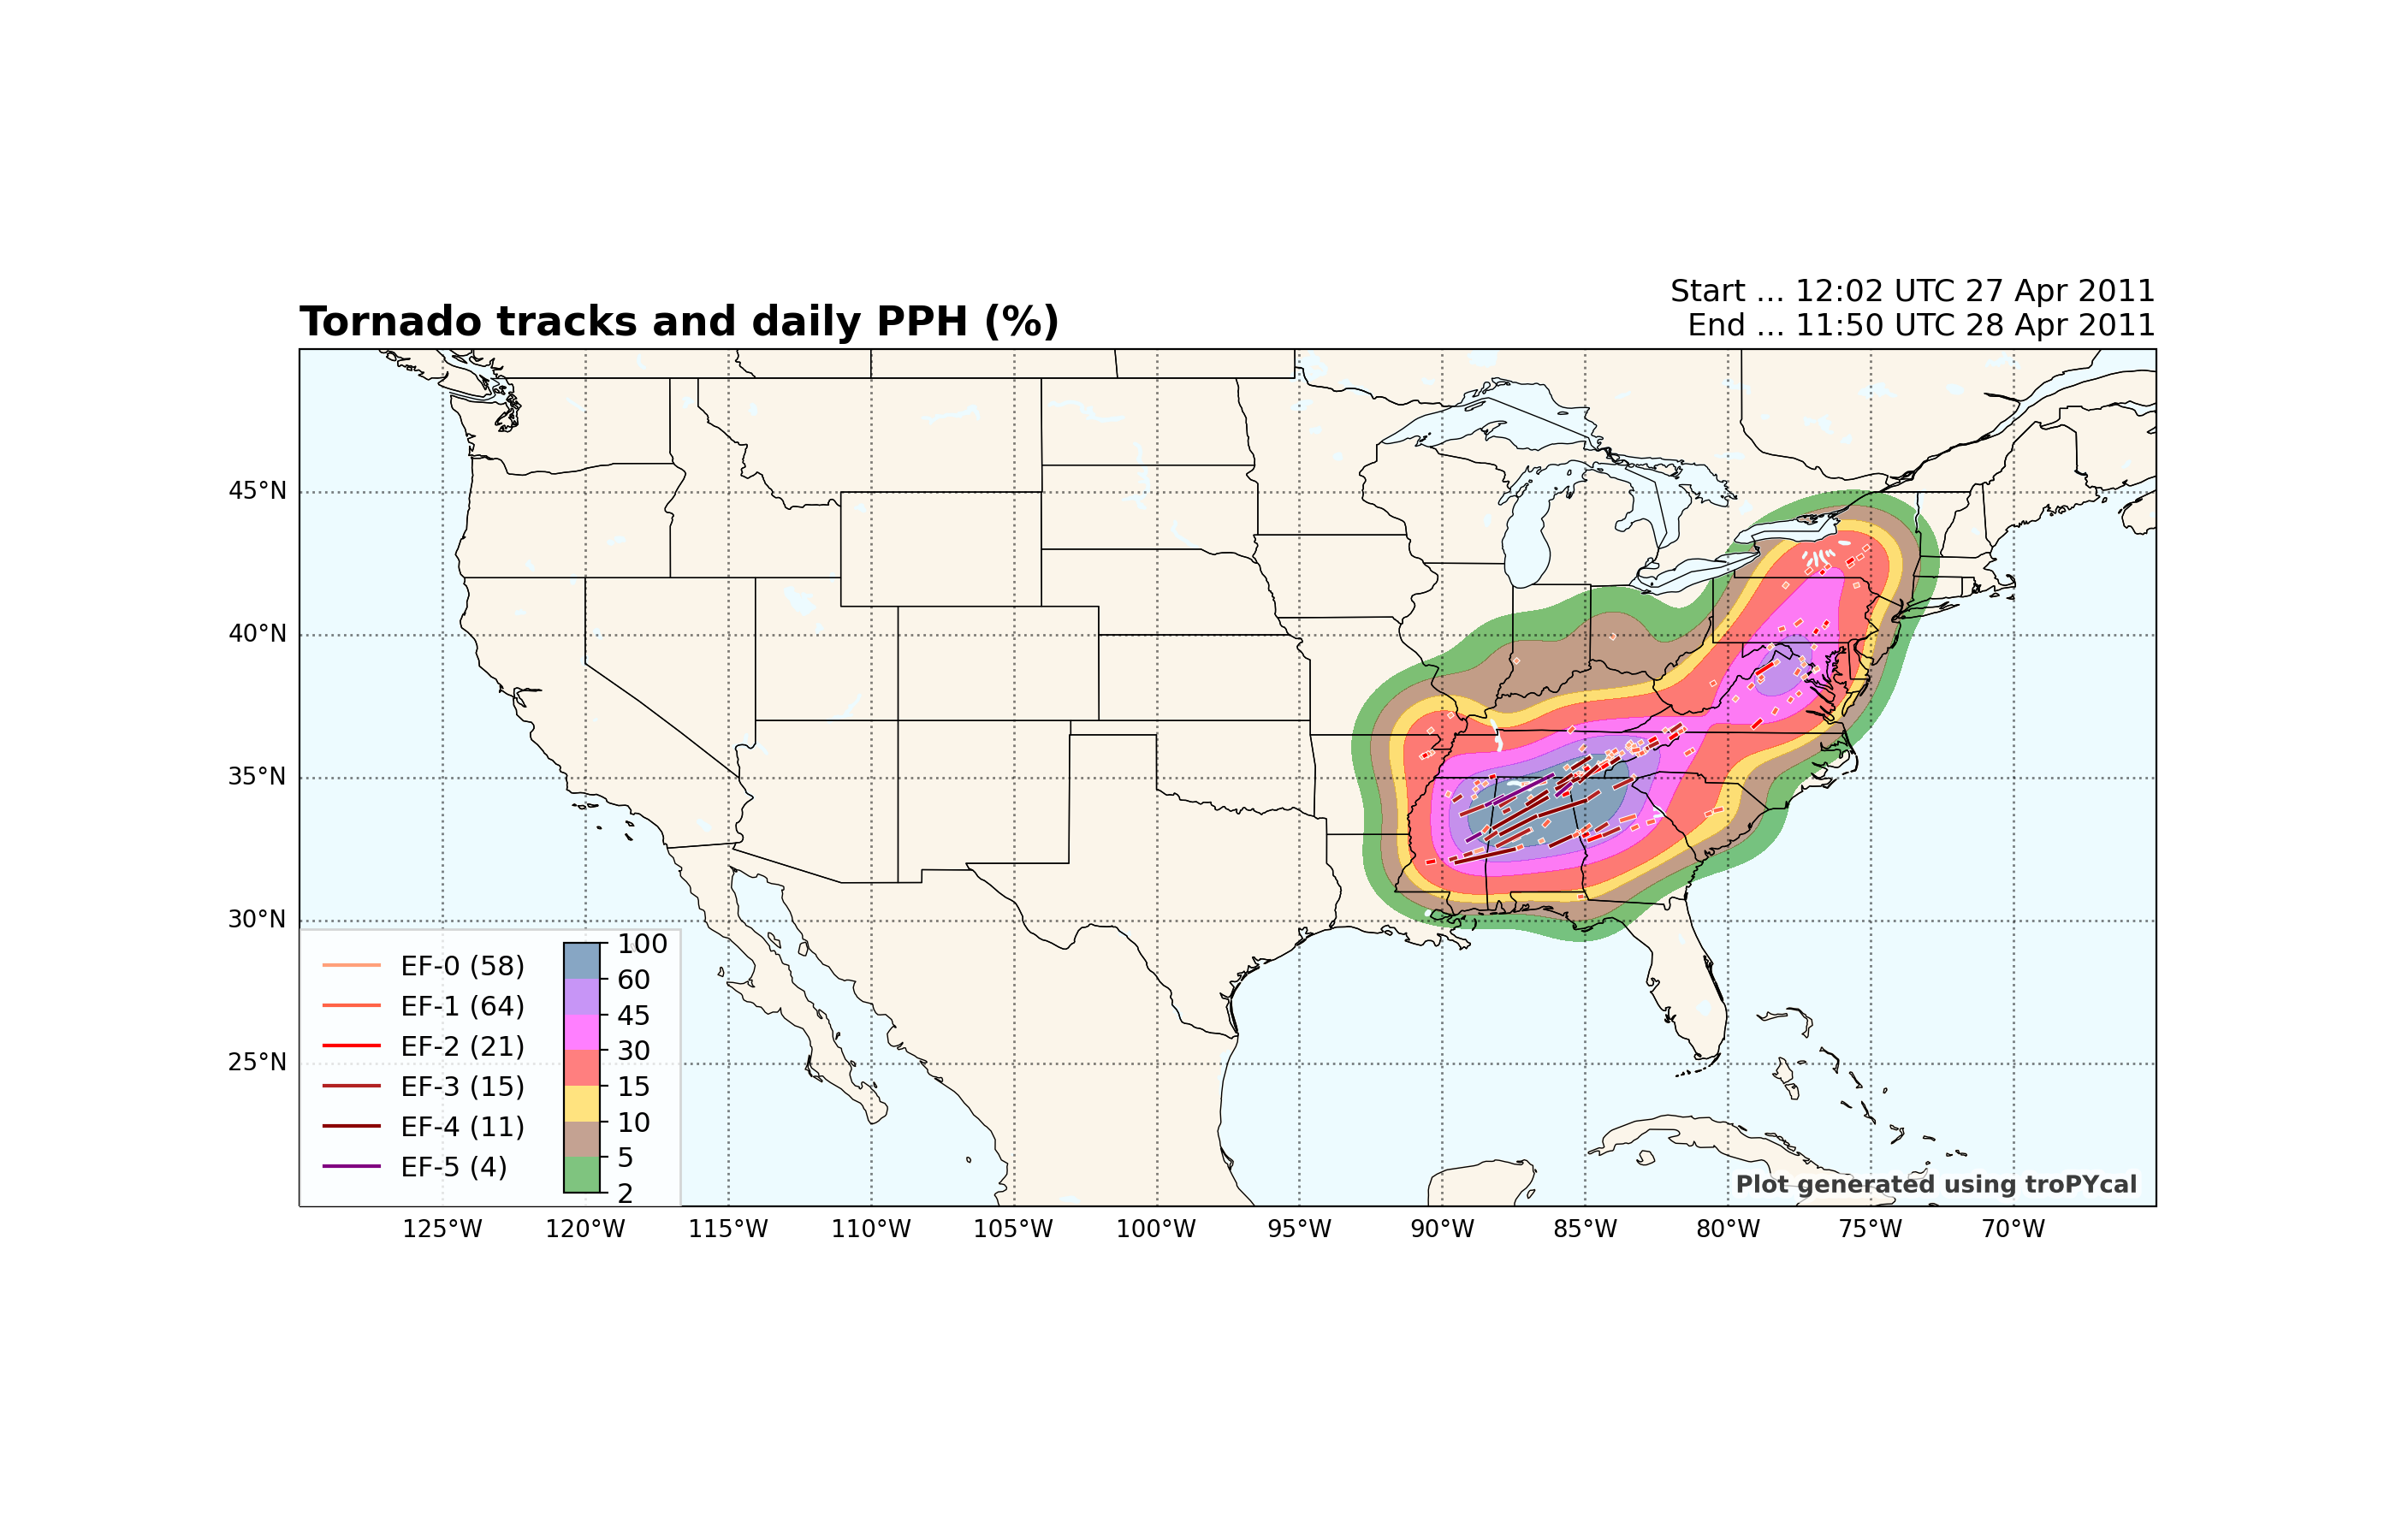 Tornado tracks and daily PPH (%), Start ... 12:02 UTC 27 Apr 2011 End ... 11:50 UTC 28 Apr 2011